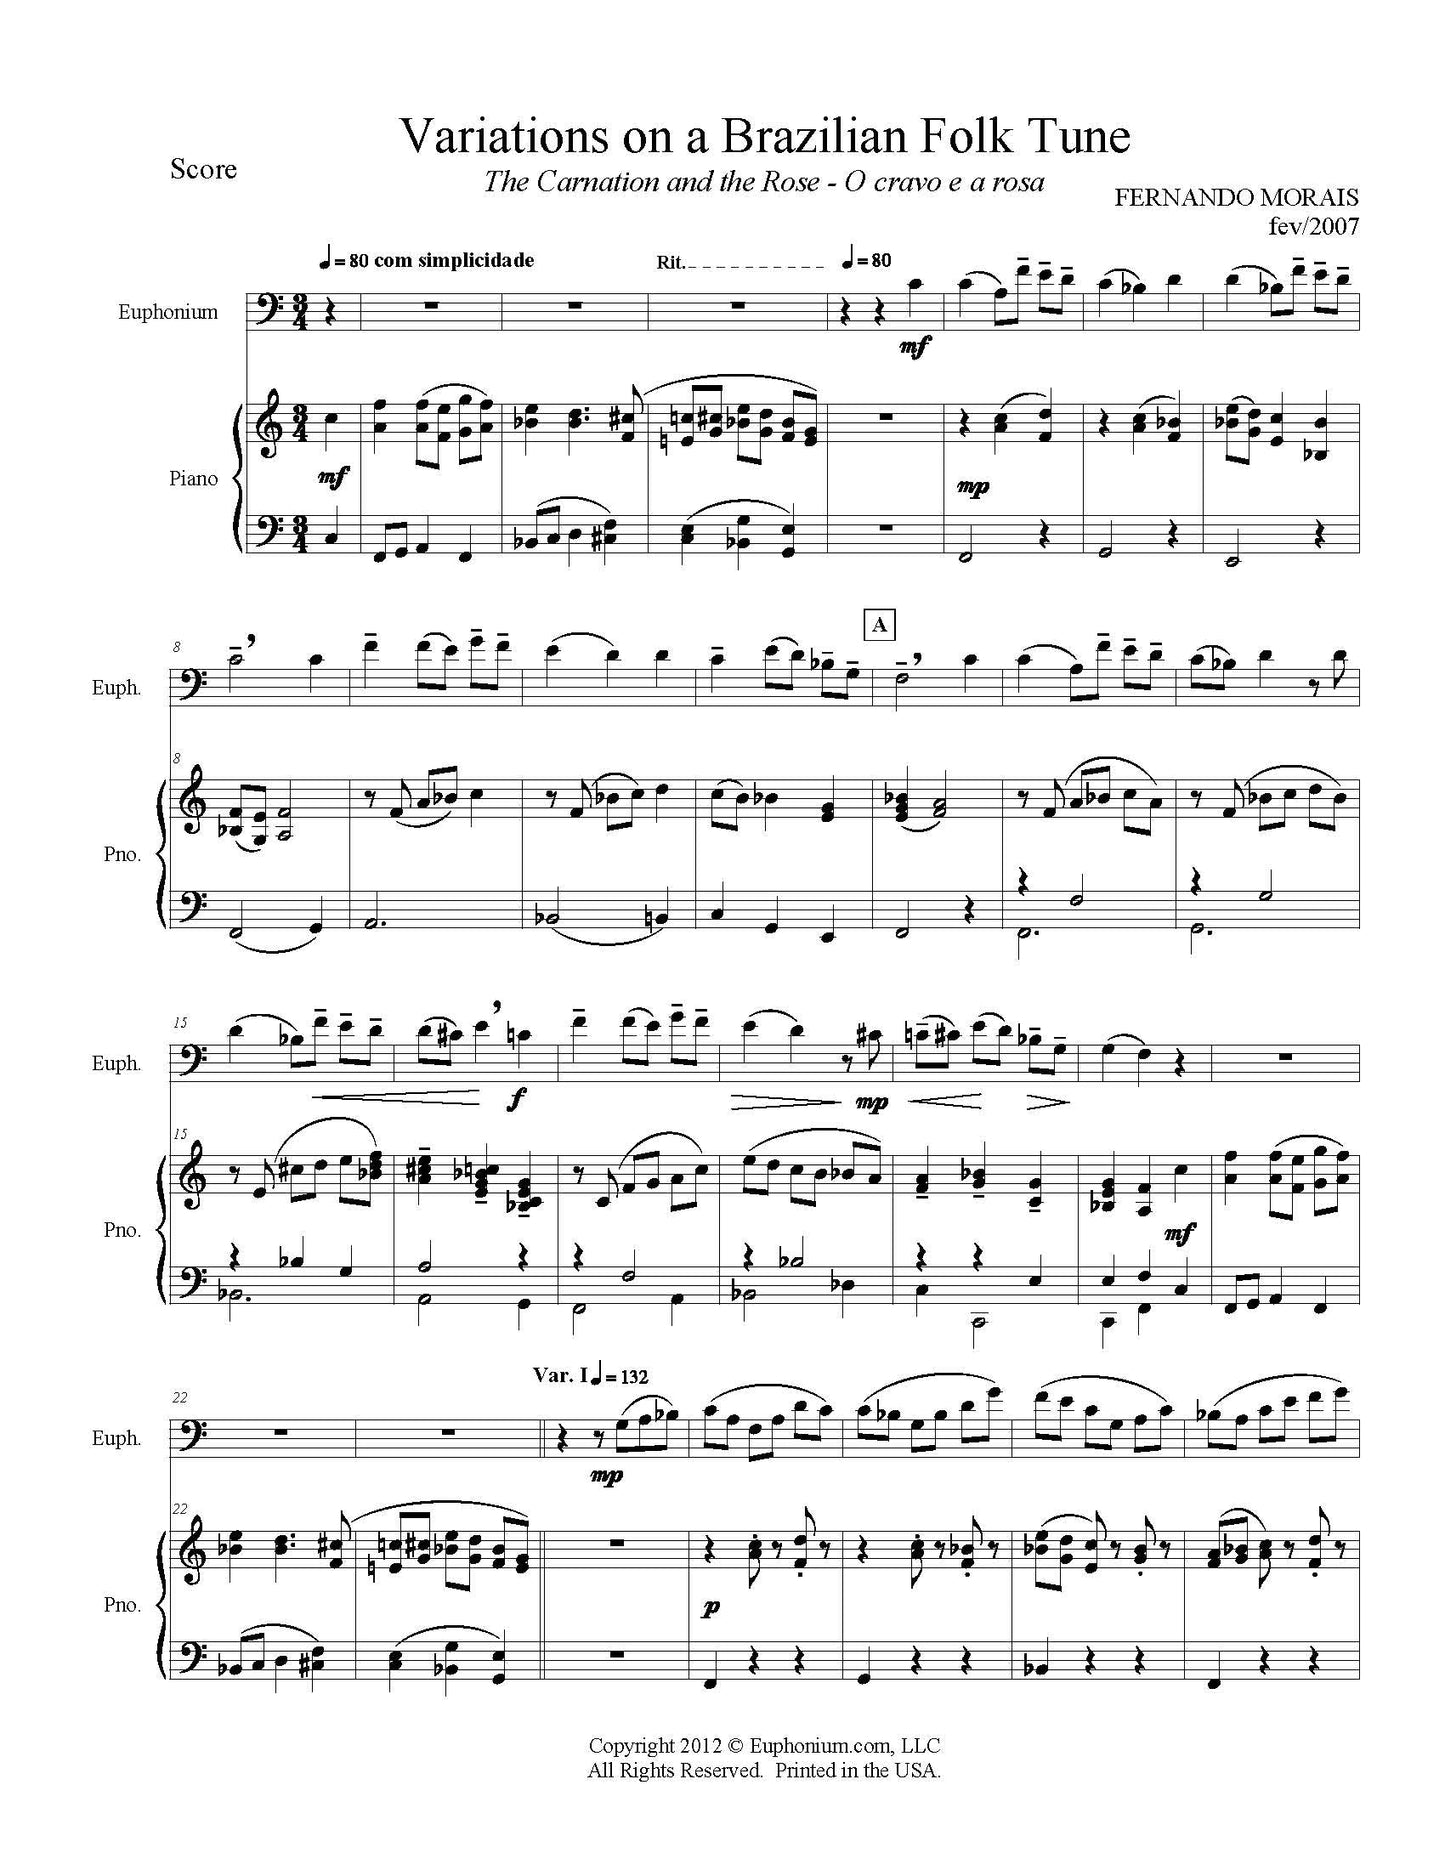 Morais - Variations on a Brazilian Folk Tune - DOWNLOAD